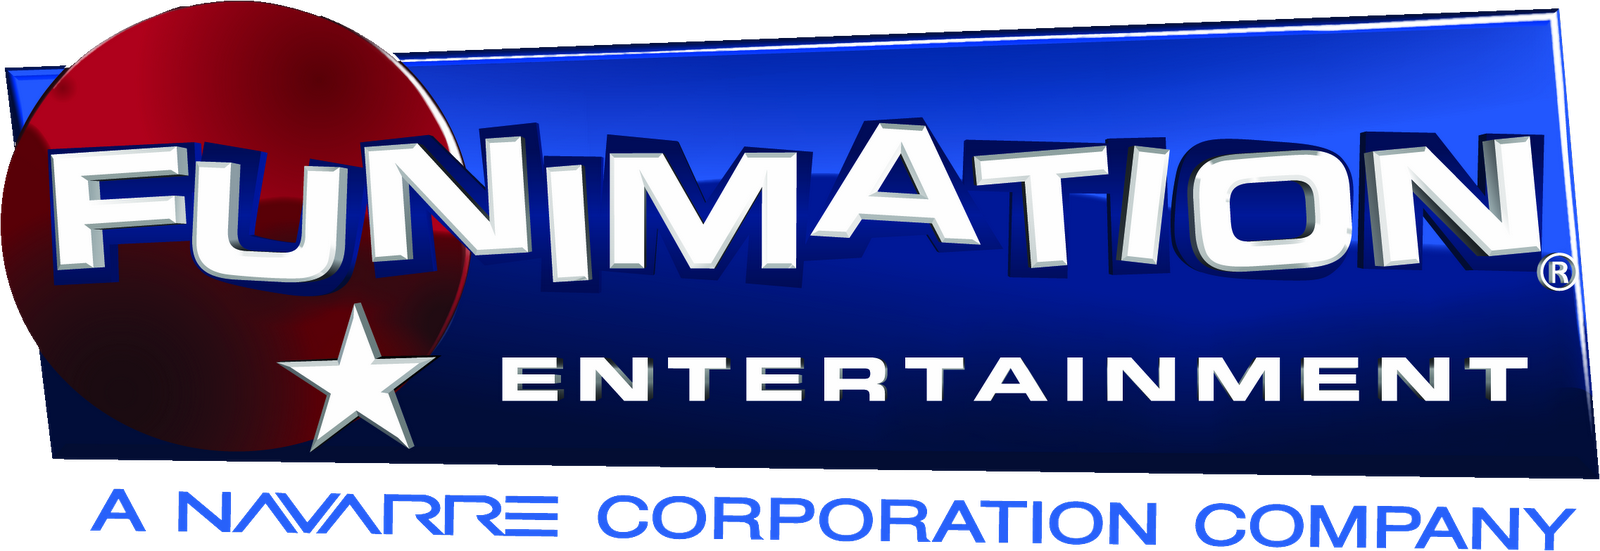 Funimation - Companies 